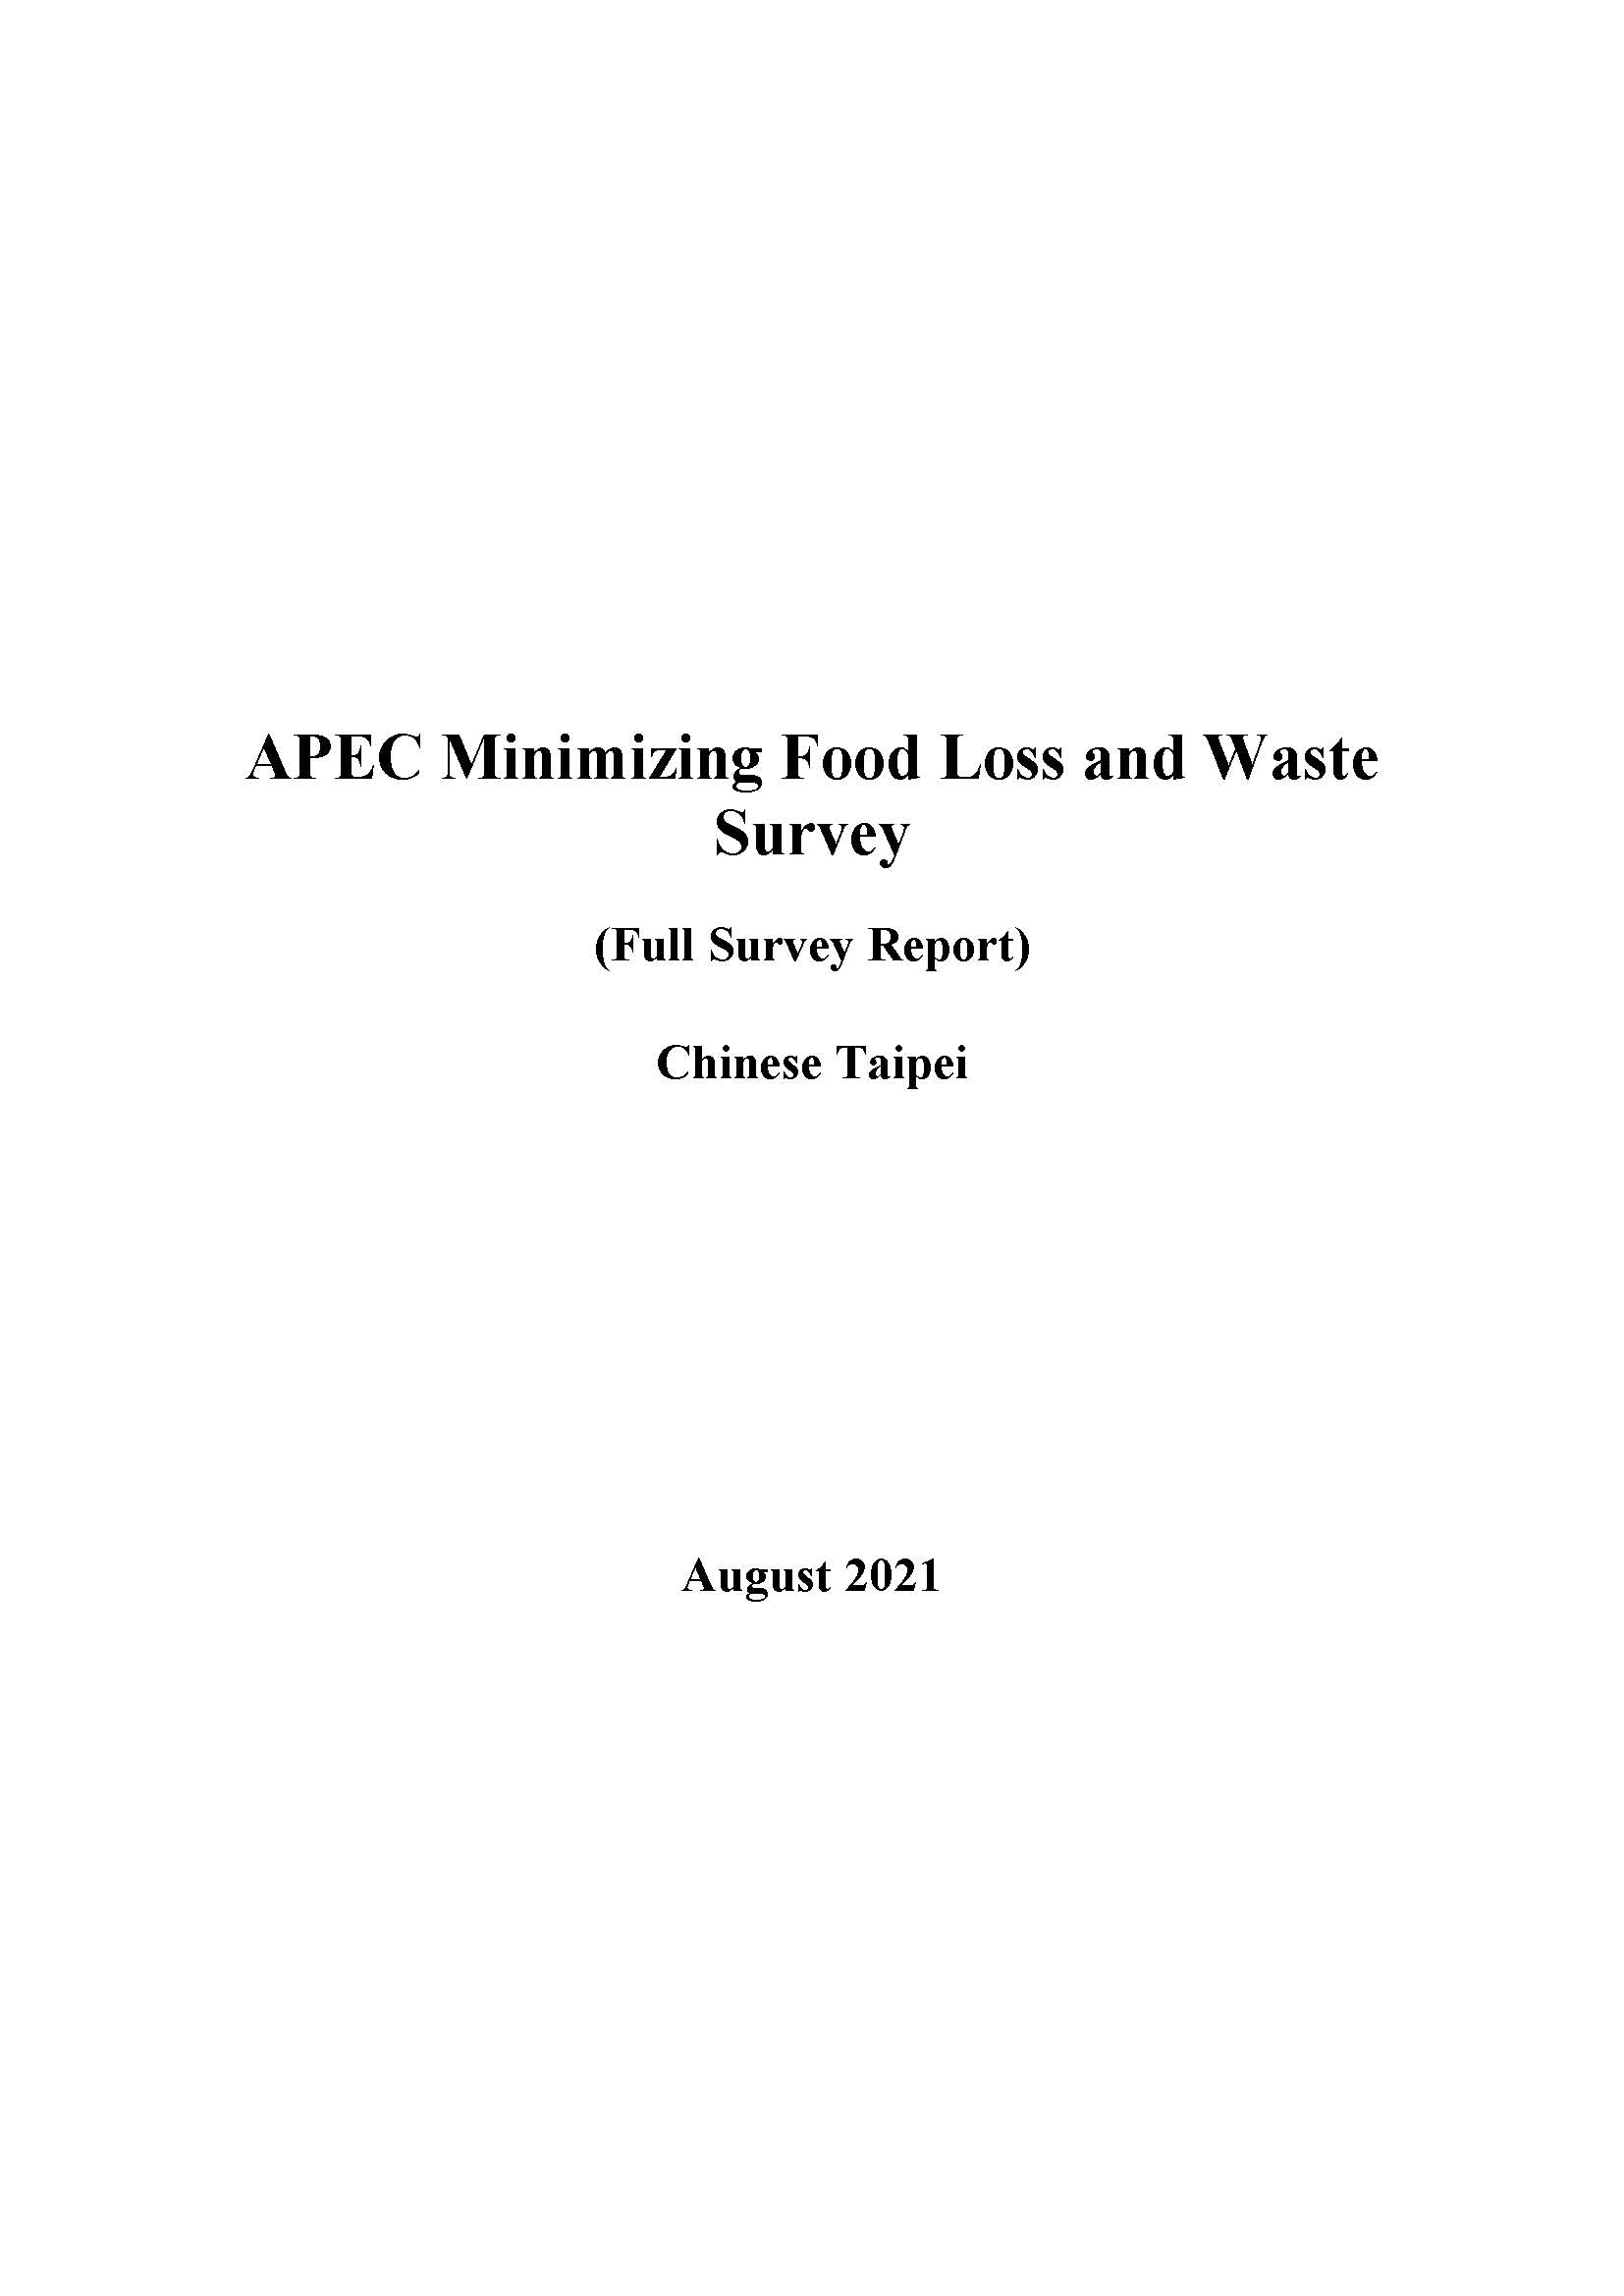 APEC Minimizing Food Loss and Waste Survey